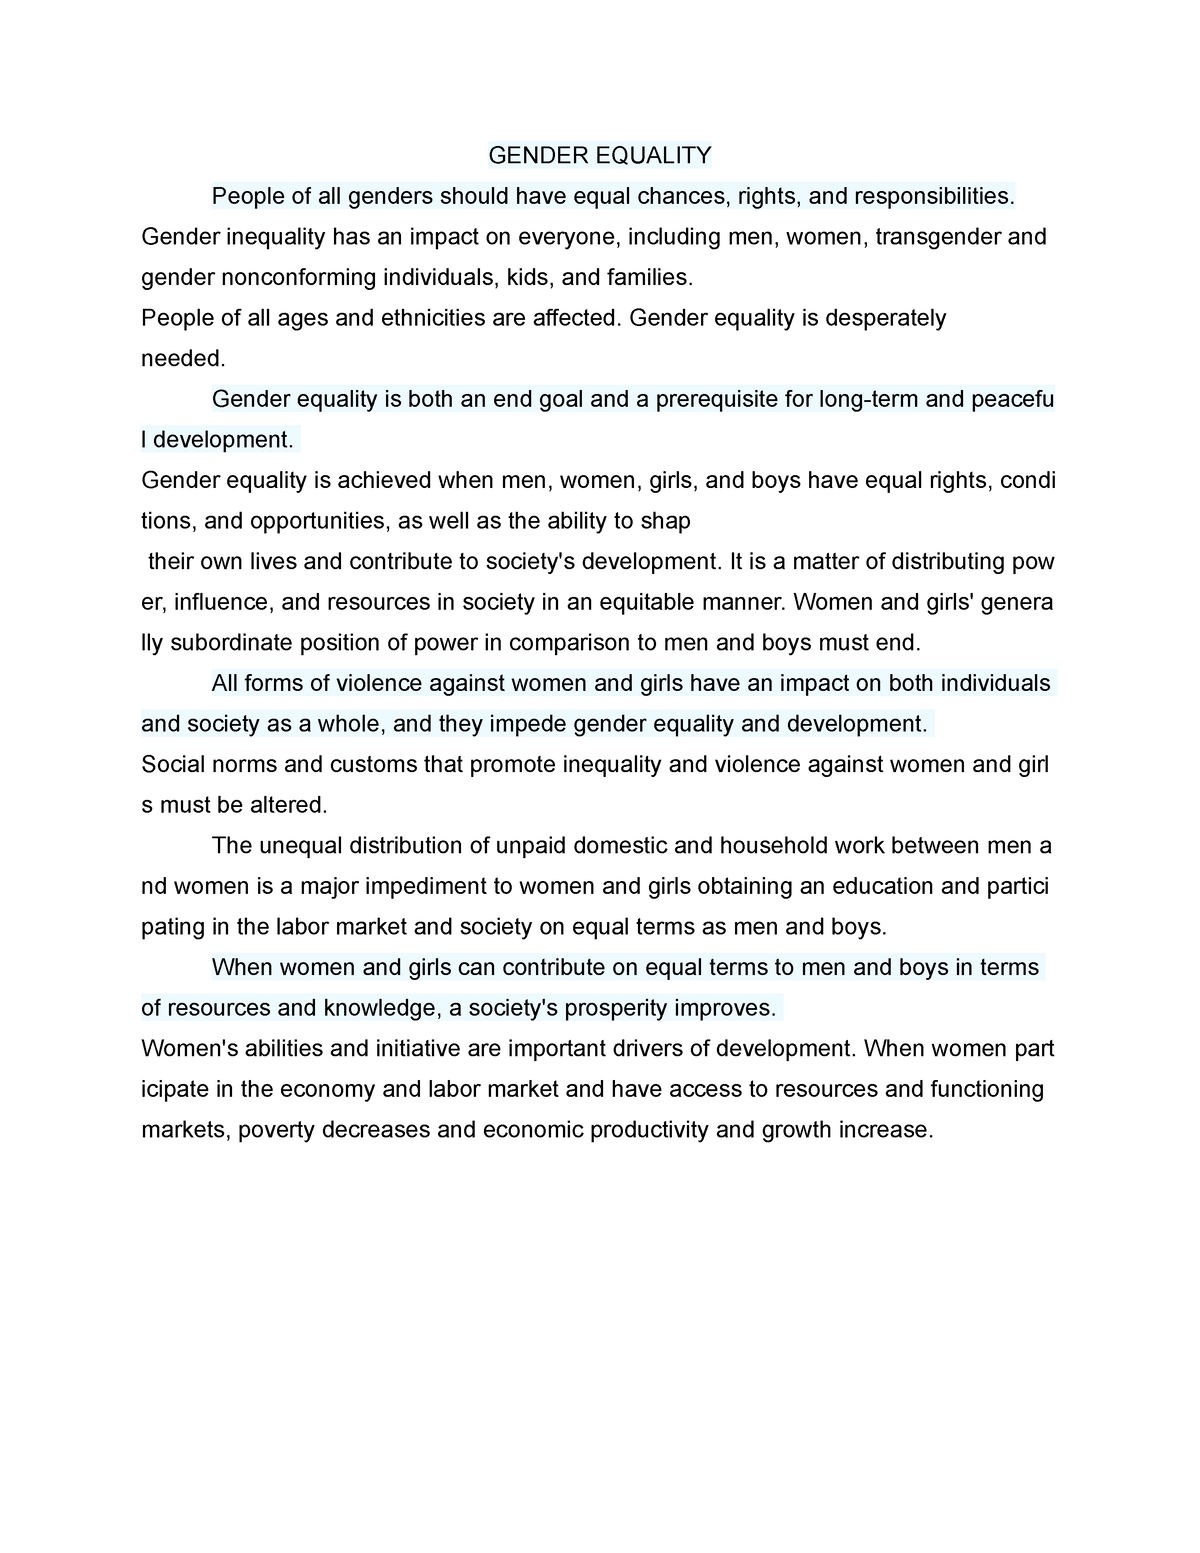 gender equality introduction for essay